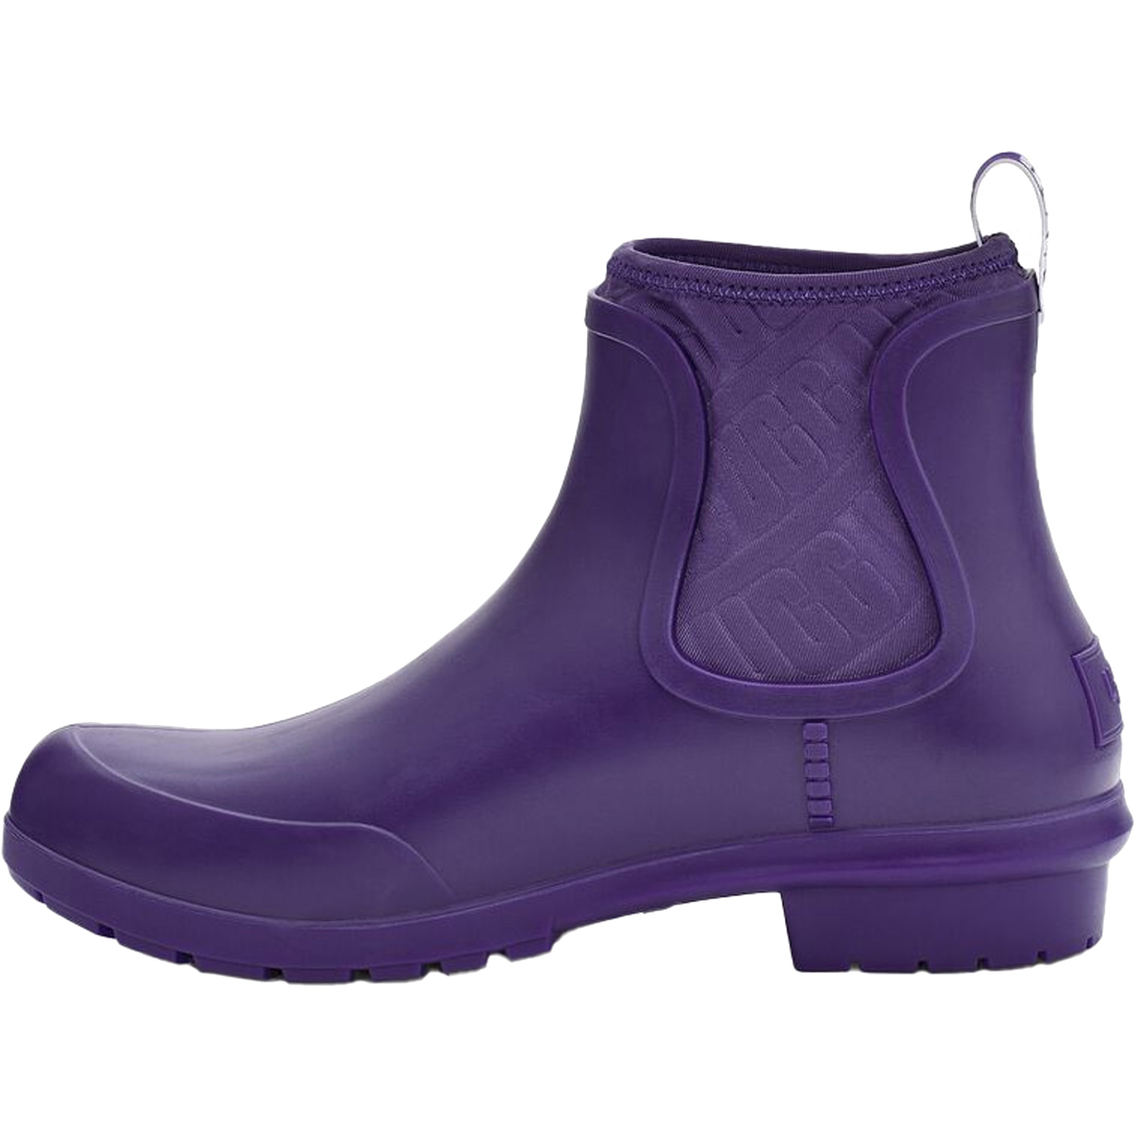 Ugg Women's Chevonne Rain Boots | Outdoor | Shoes | Shop The Exchange